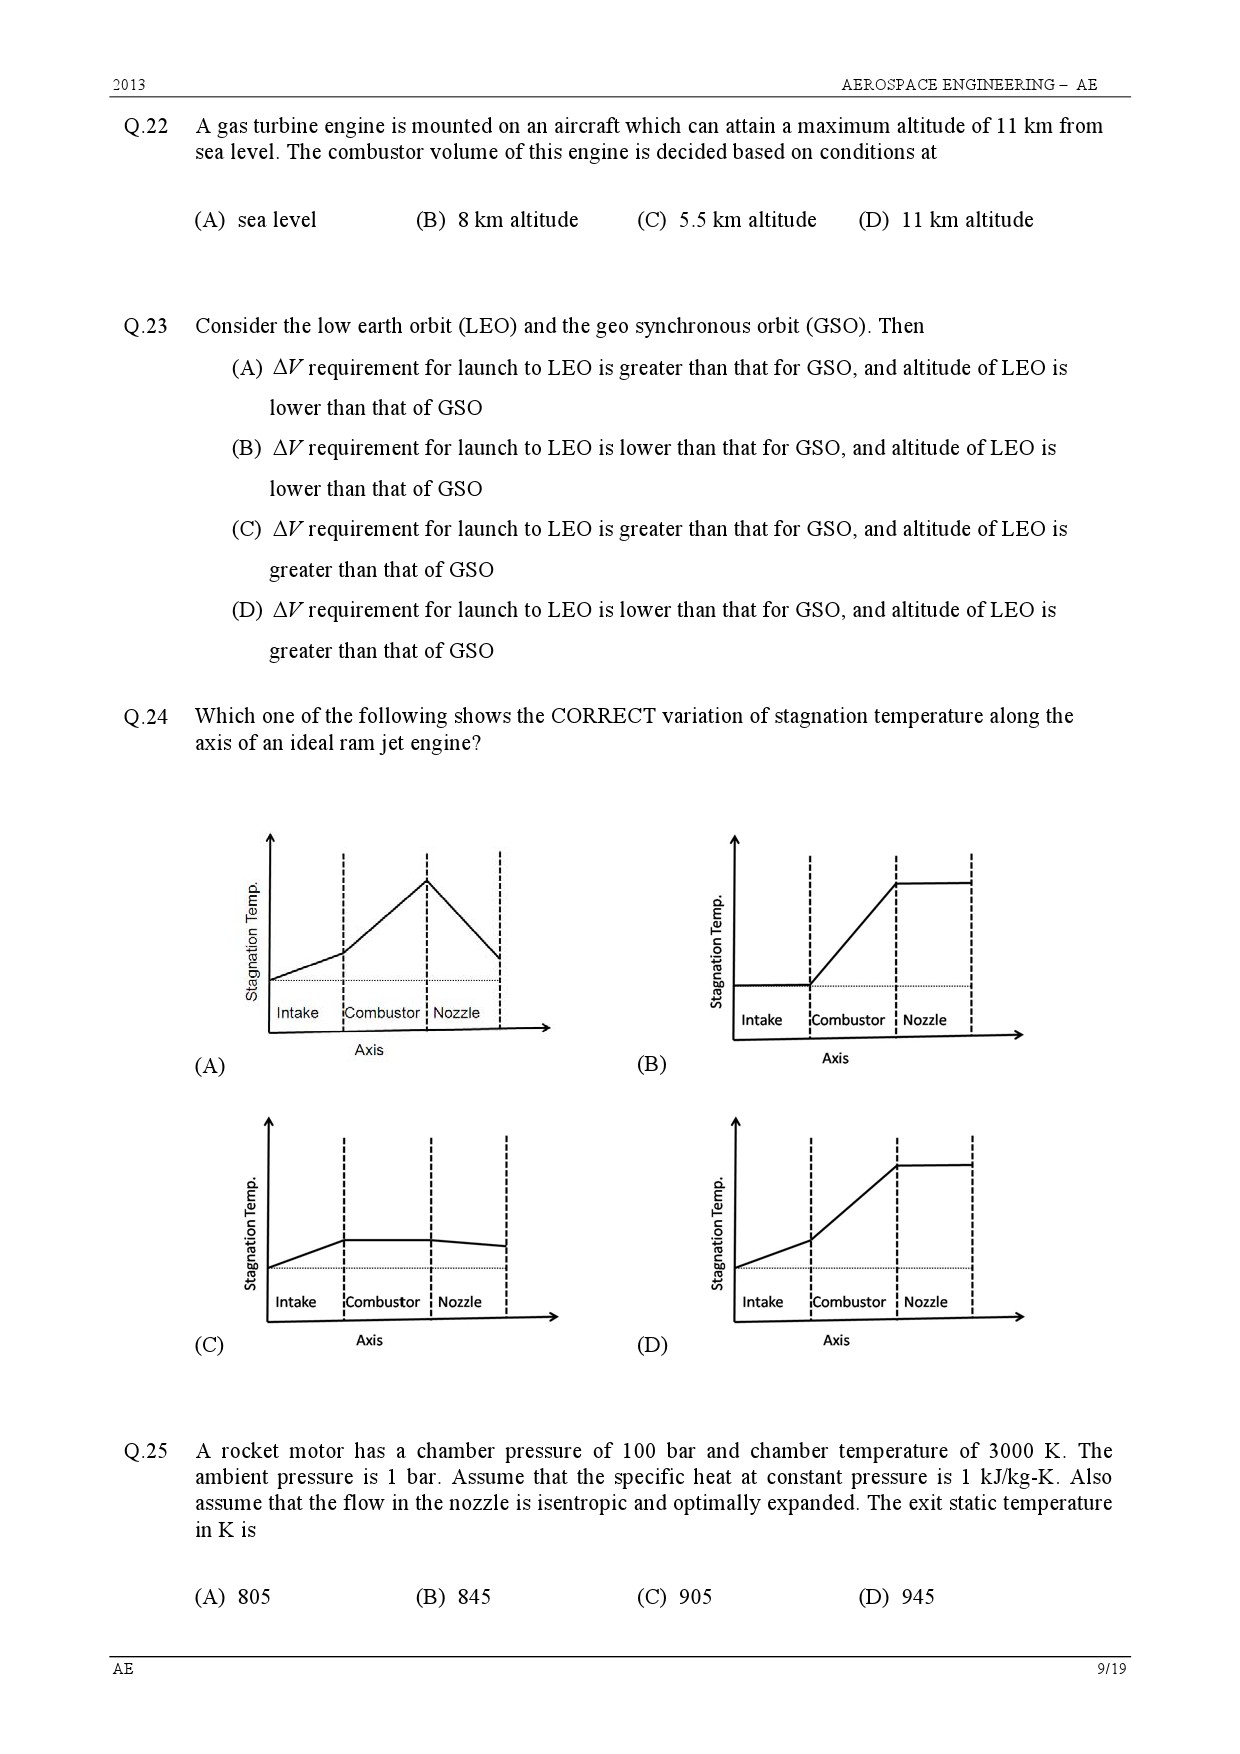 GATE Exam 2013 Aerospace Engineering Question Paper 9